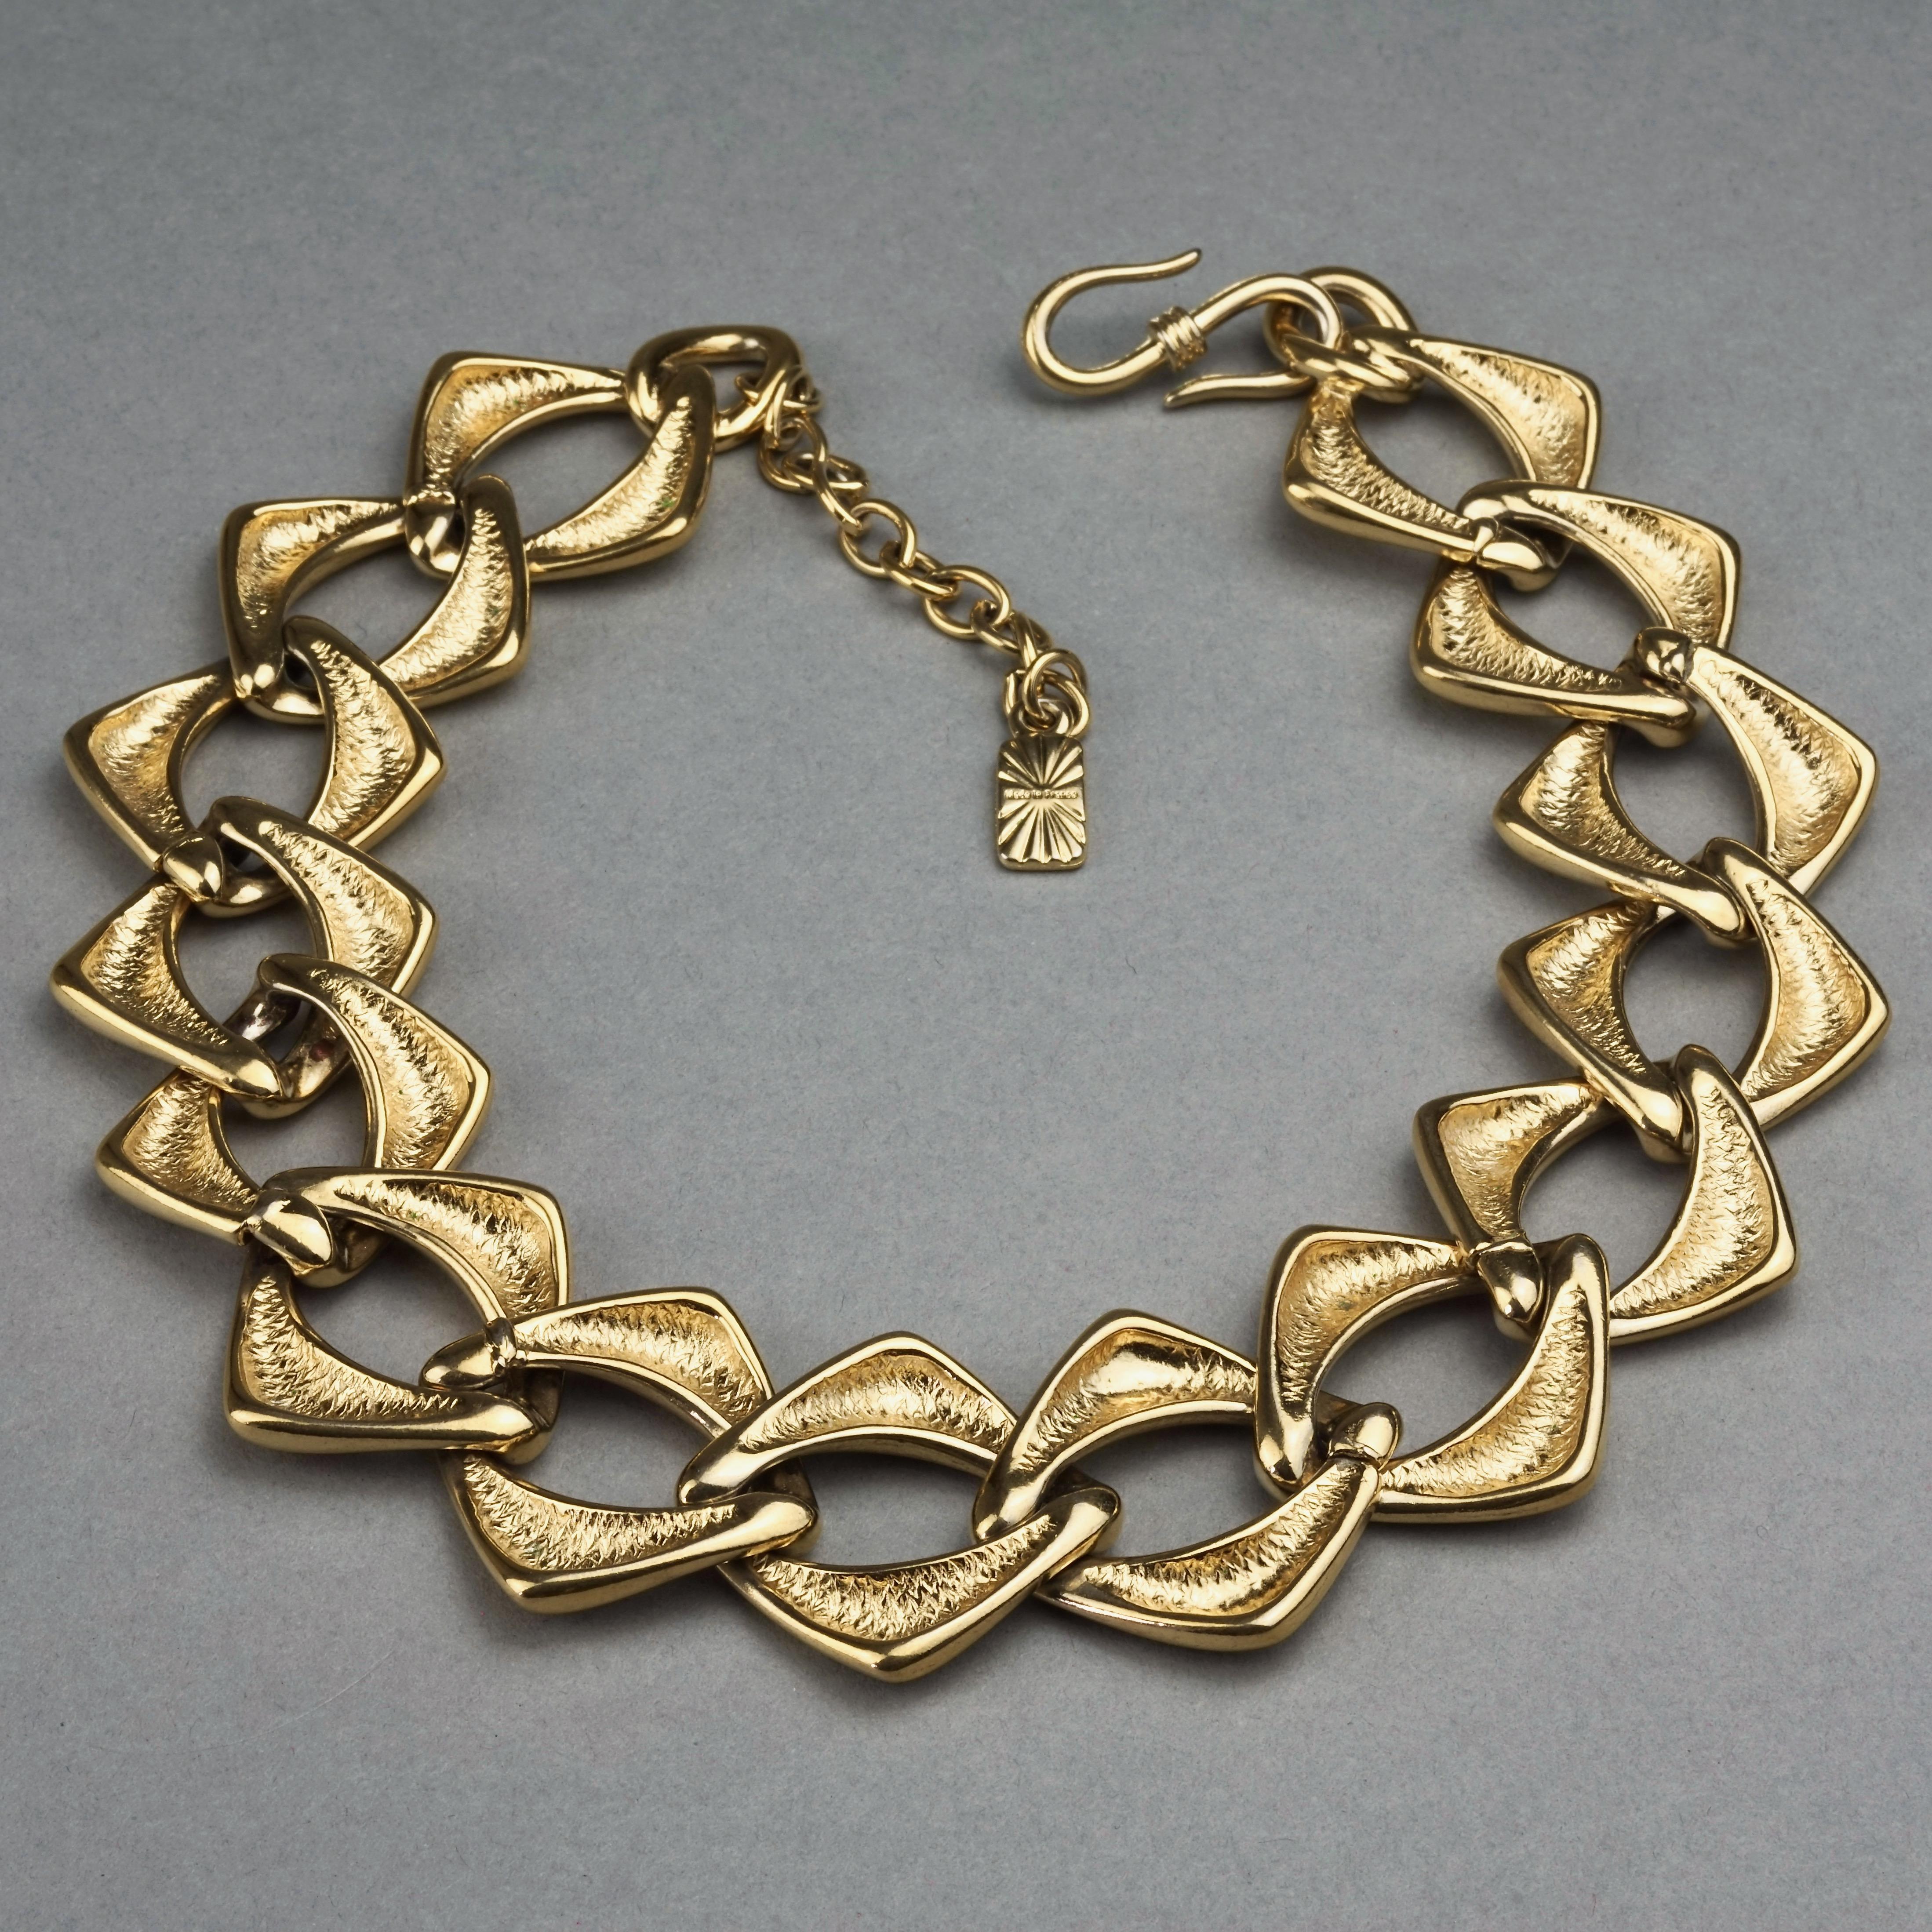 Vintage YVES SAINT LAURENT Ysl by Robert Goossens Chain Choker Necklace For Sale 3